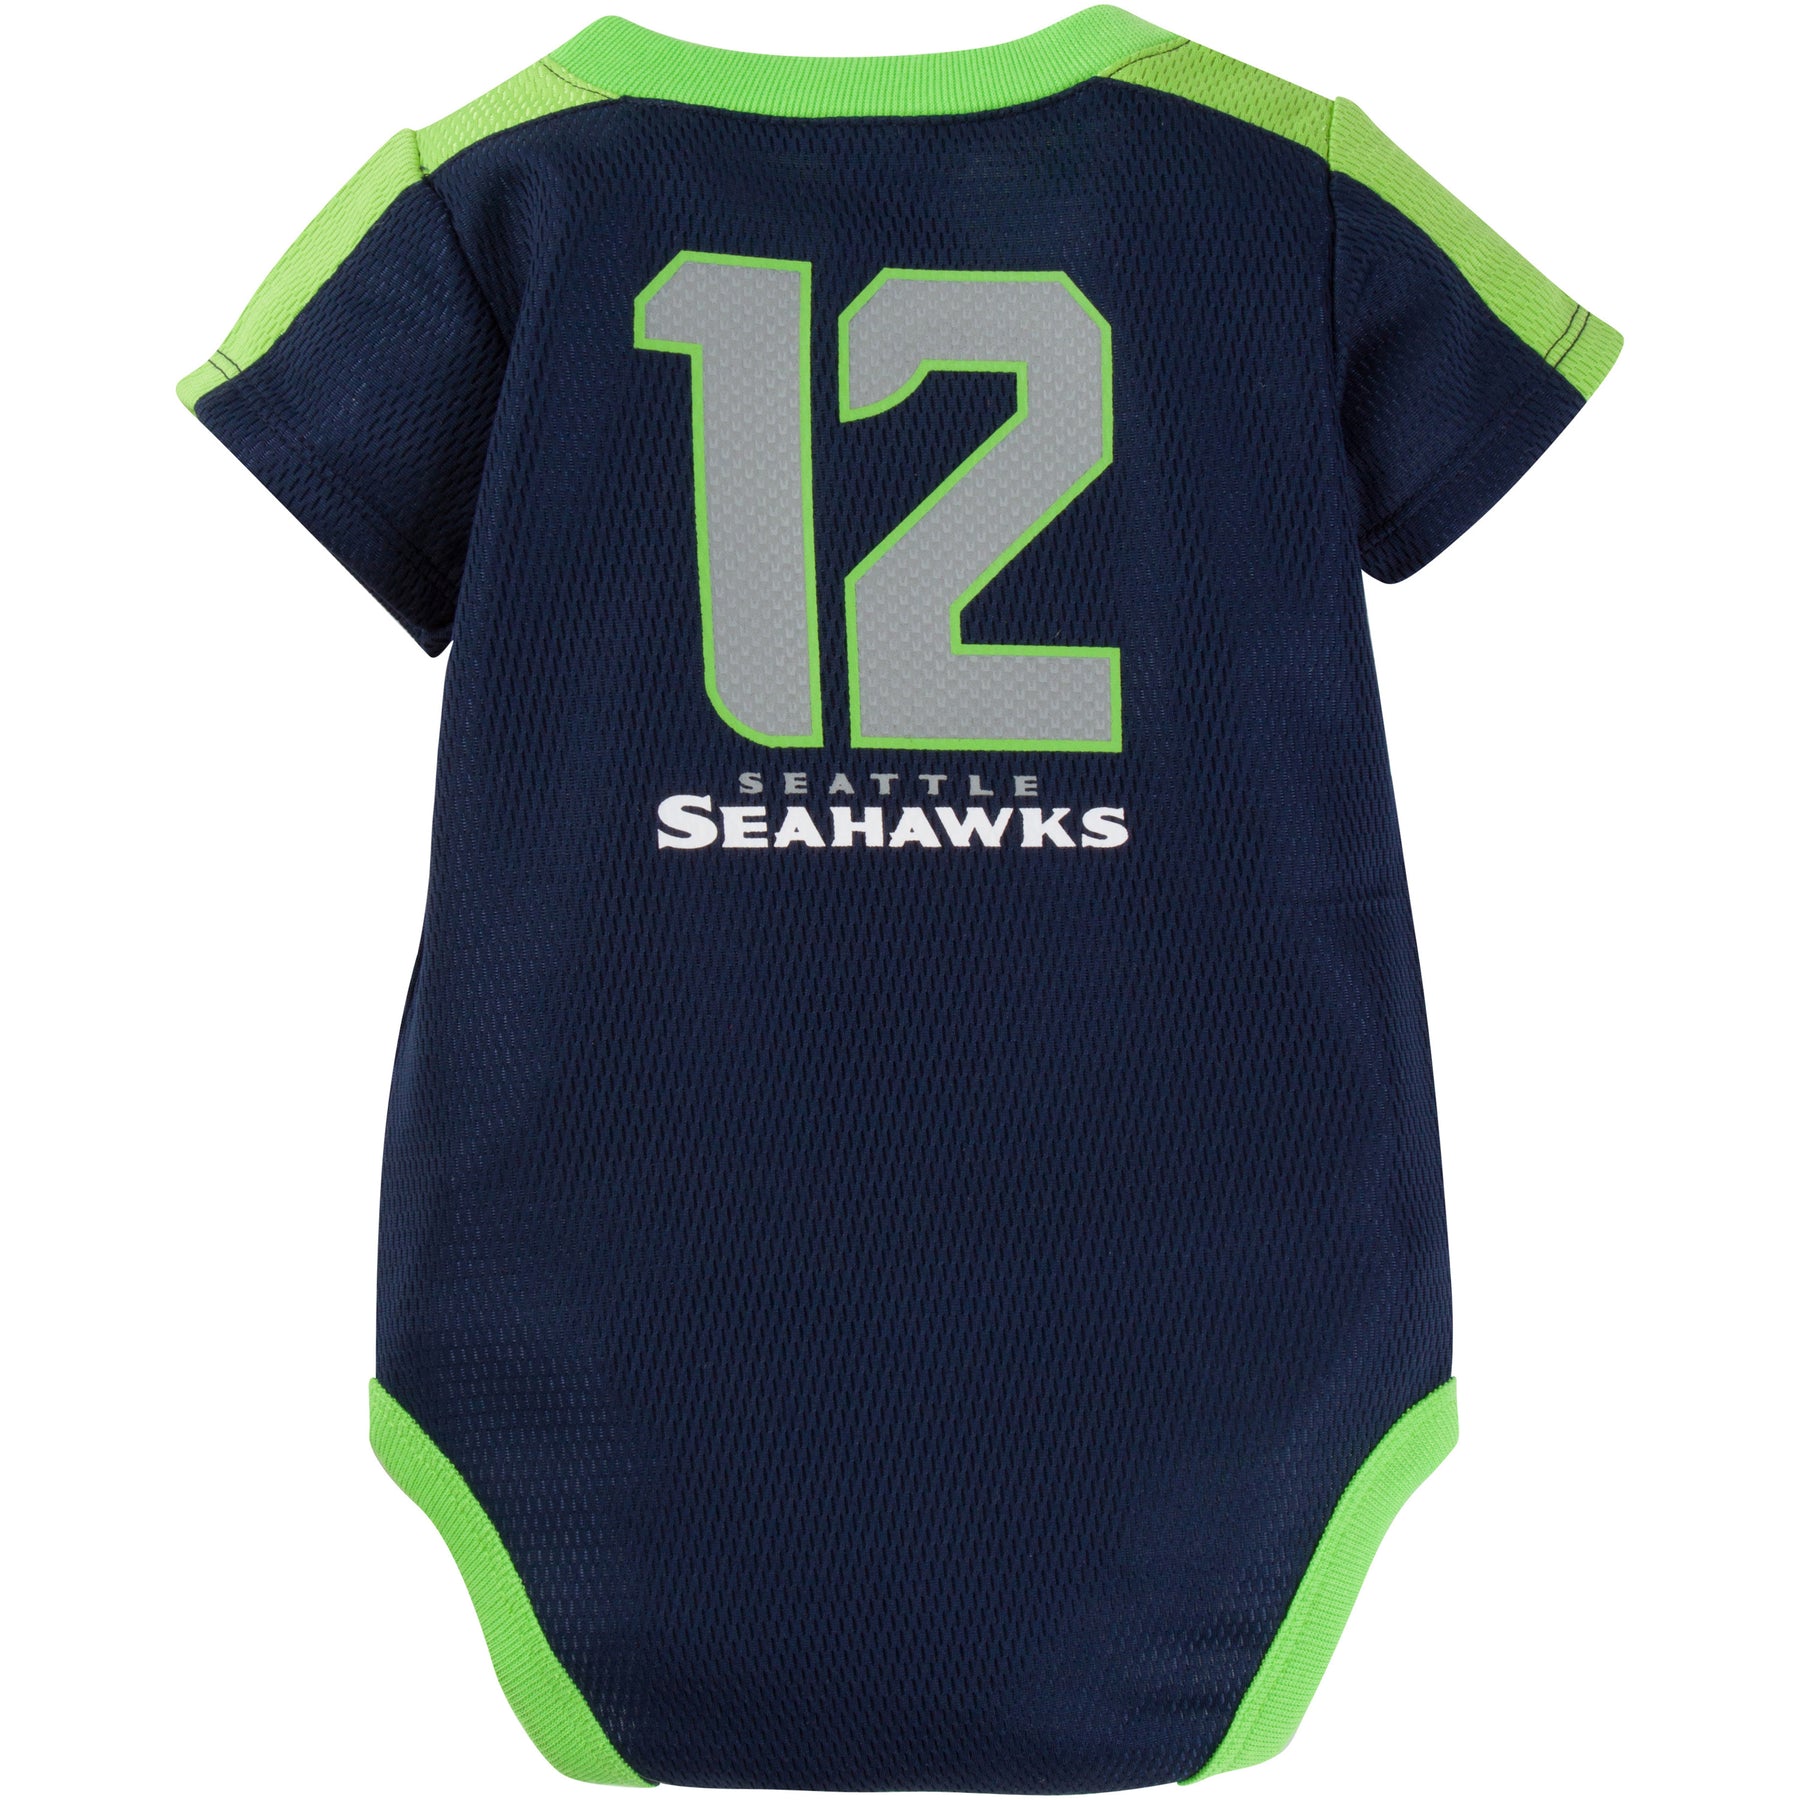 Seahawks Baby Jersey Onesie babyfans